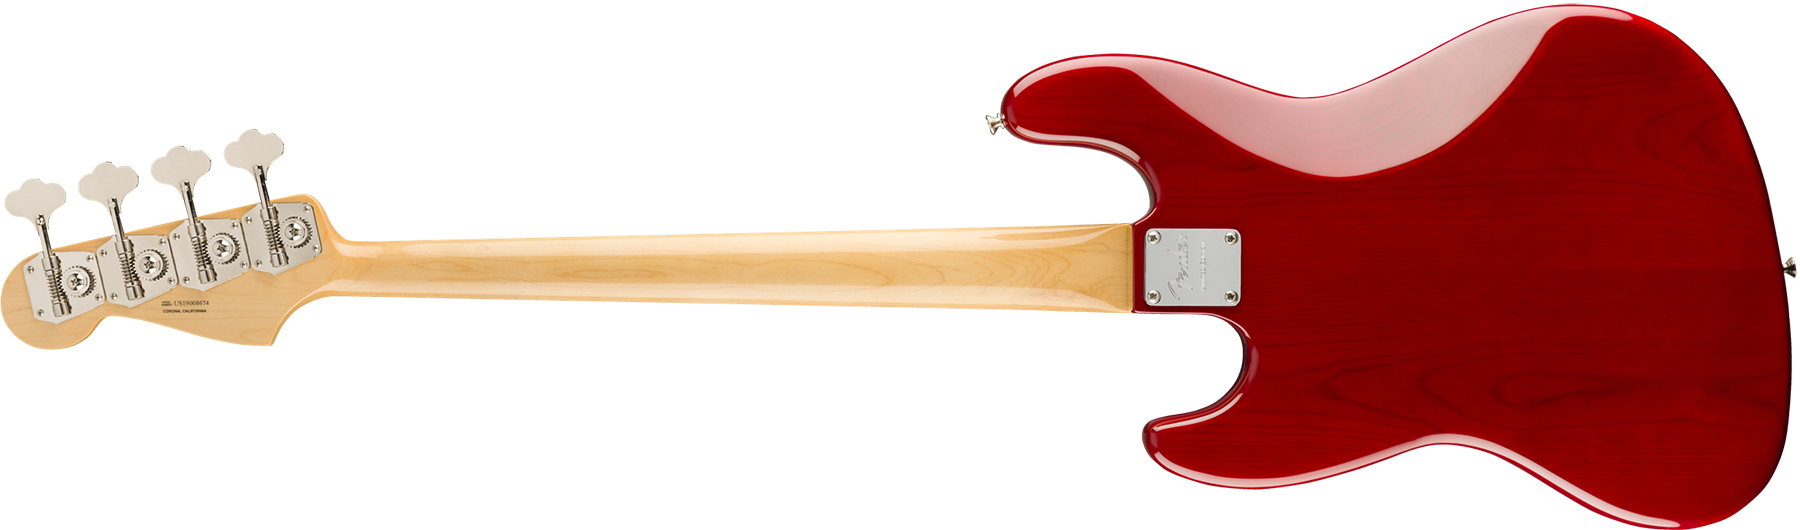 Fender Jazz Bass Flame Ash Top Rarities Usa Eb - Plasma Red Burst - Basse Électrique Solid Body - Variation 1